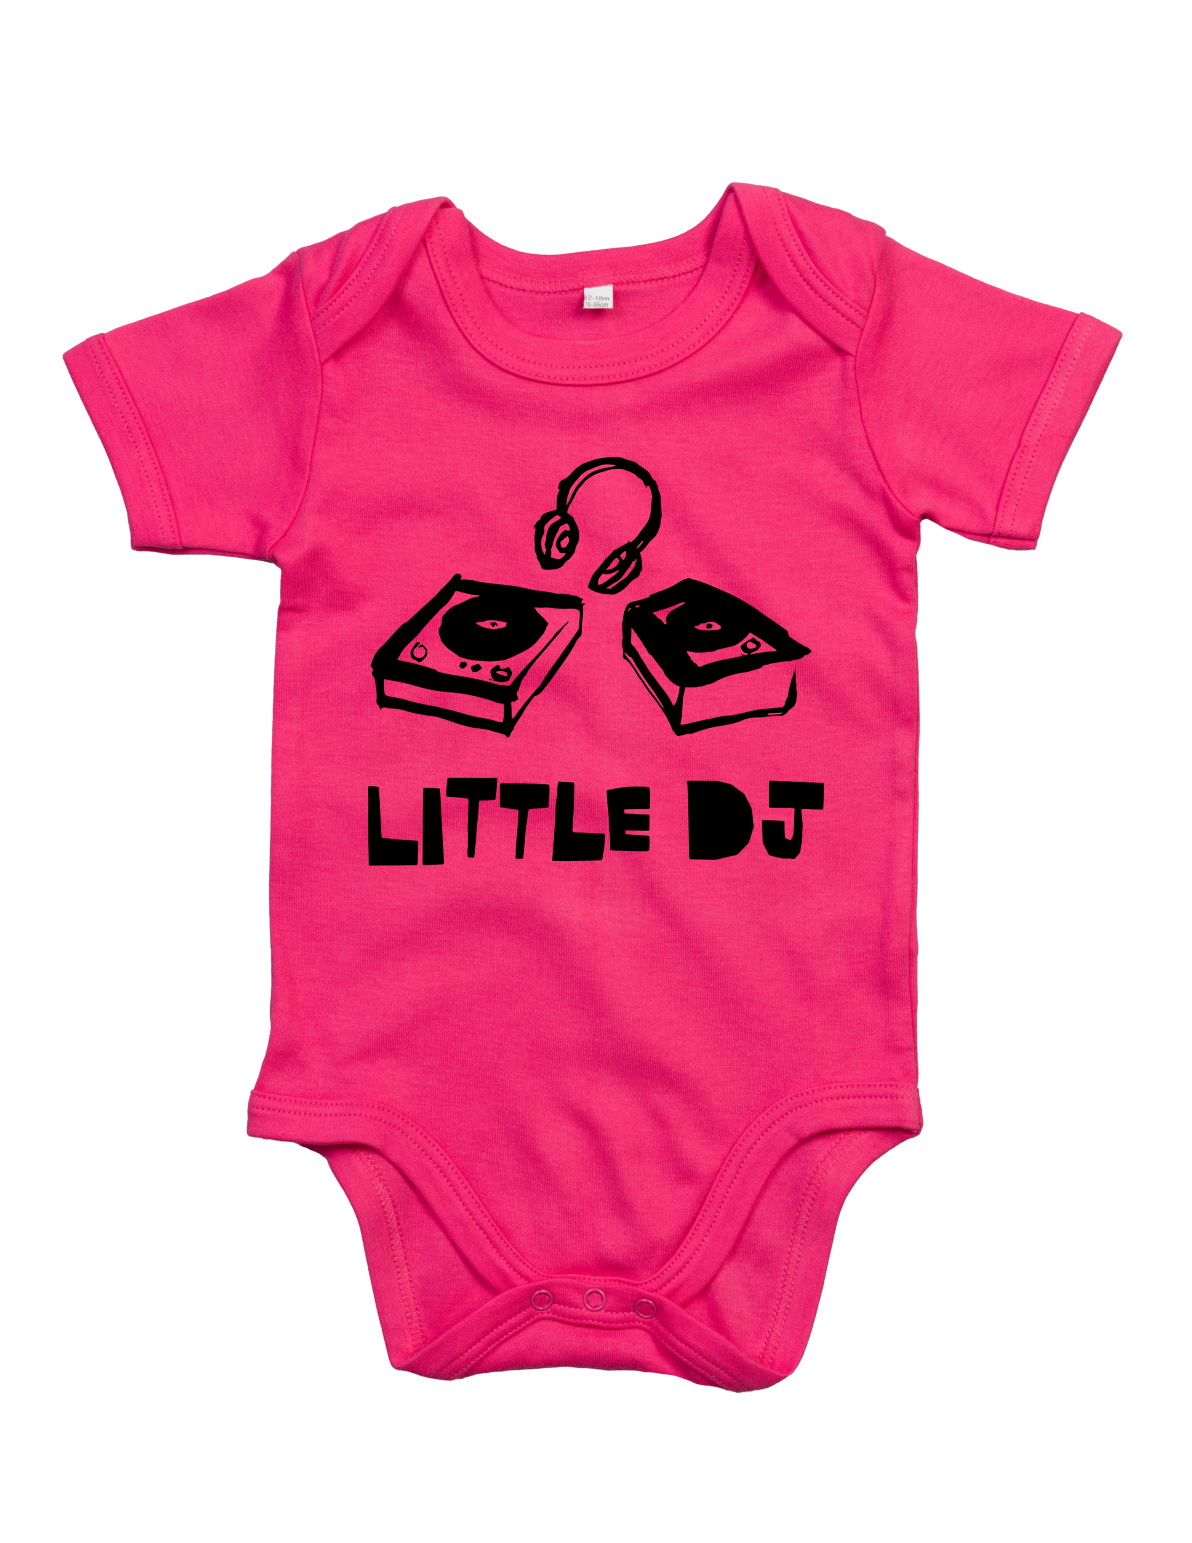 'Little DJ' Organic Babygro